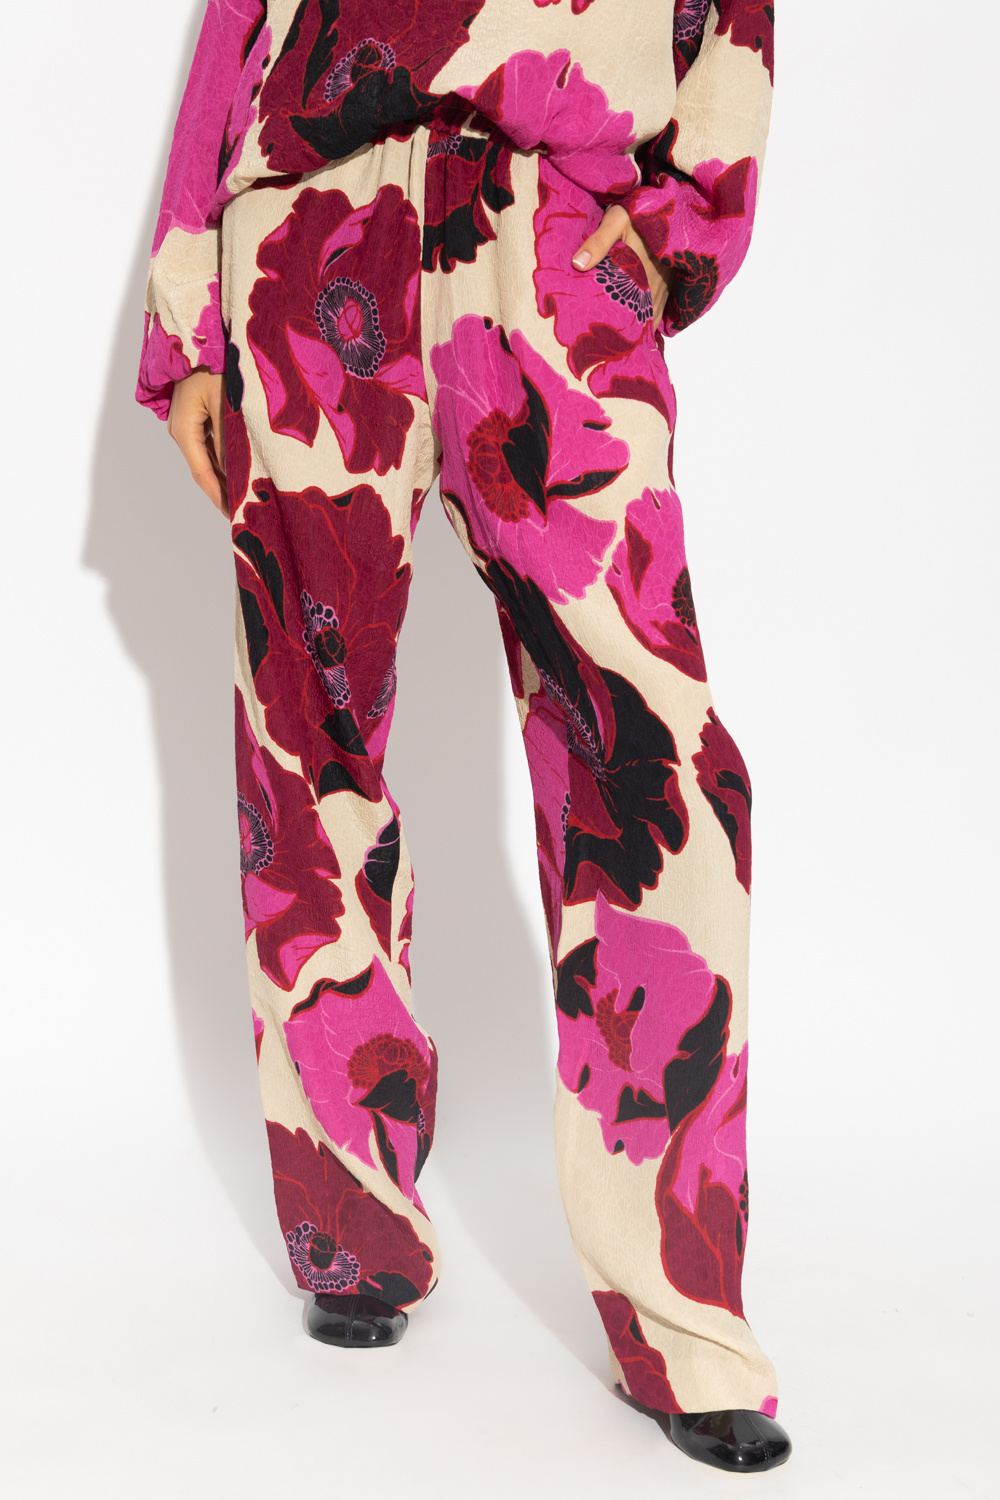 South Beach Transparente Shorts und Oberteil im Stufenlook Trousers with floral motif